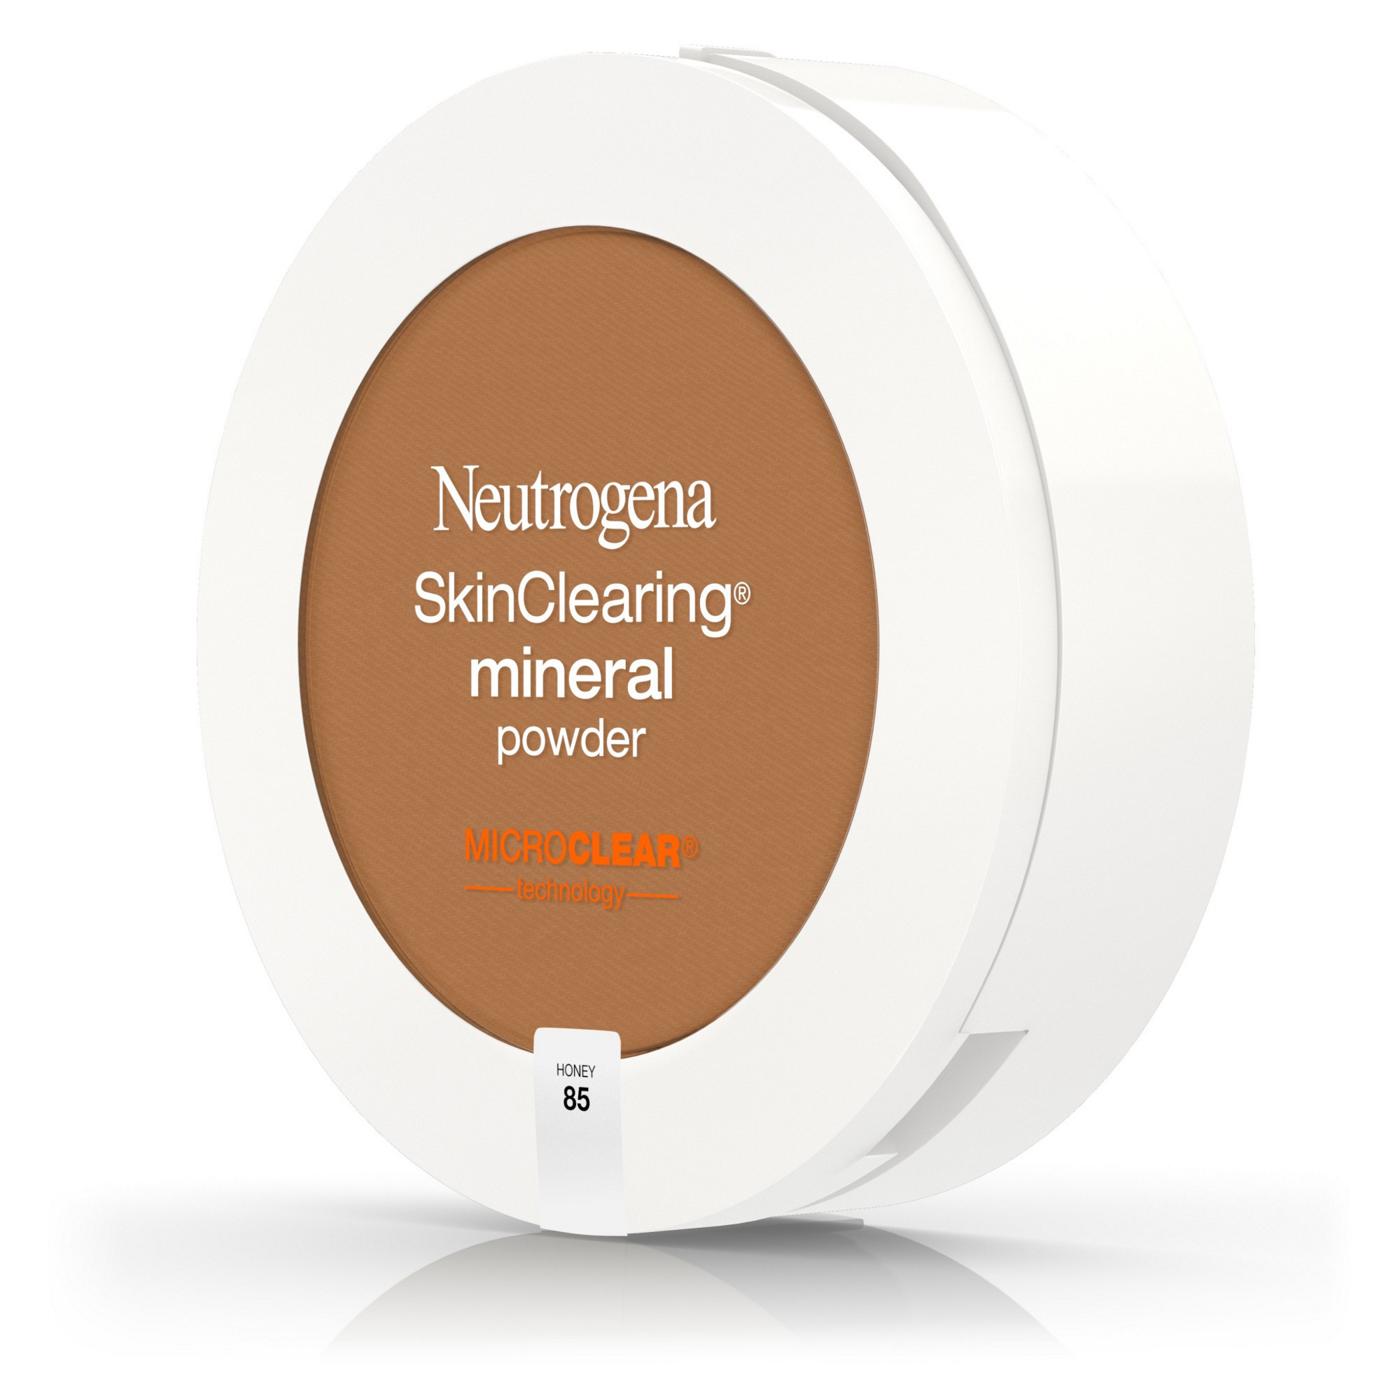 Neutrogena Skinclearing Mineral Powder 85 Honey; image 3 of 5